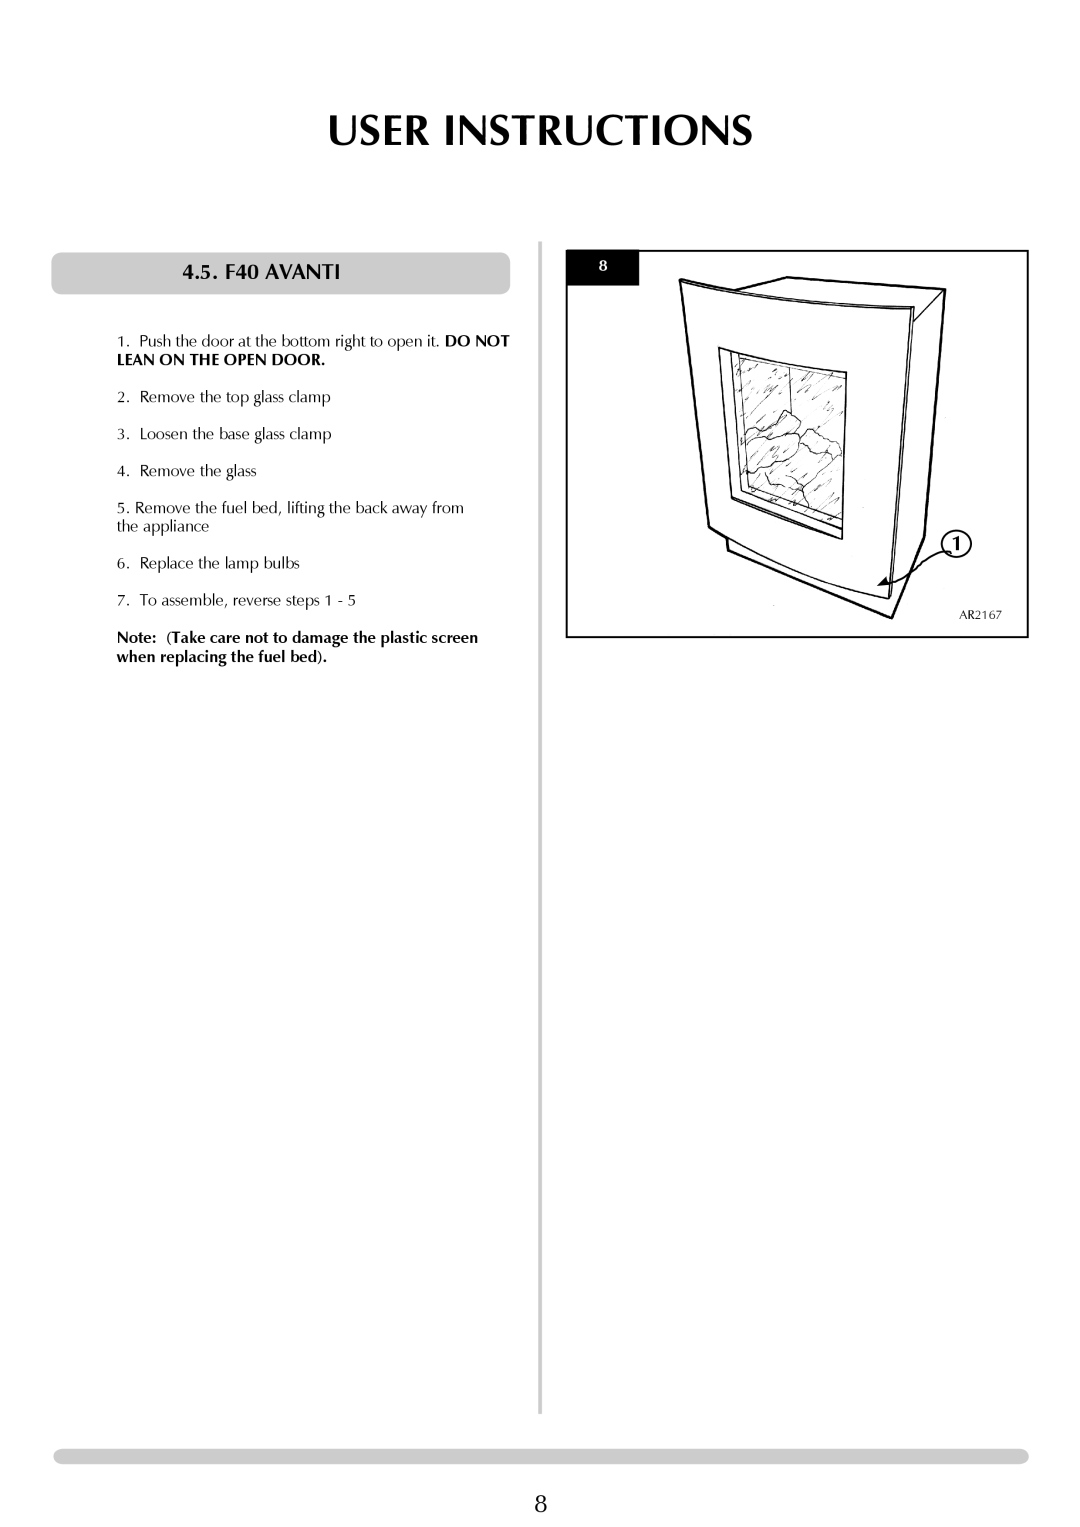 Stovax Electric Stove Range manual User Instructions, 4.5.F40 AVANTI, Lean On The Open Door, AR2167 